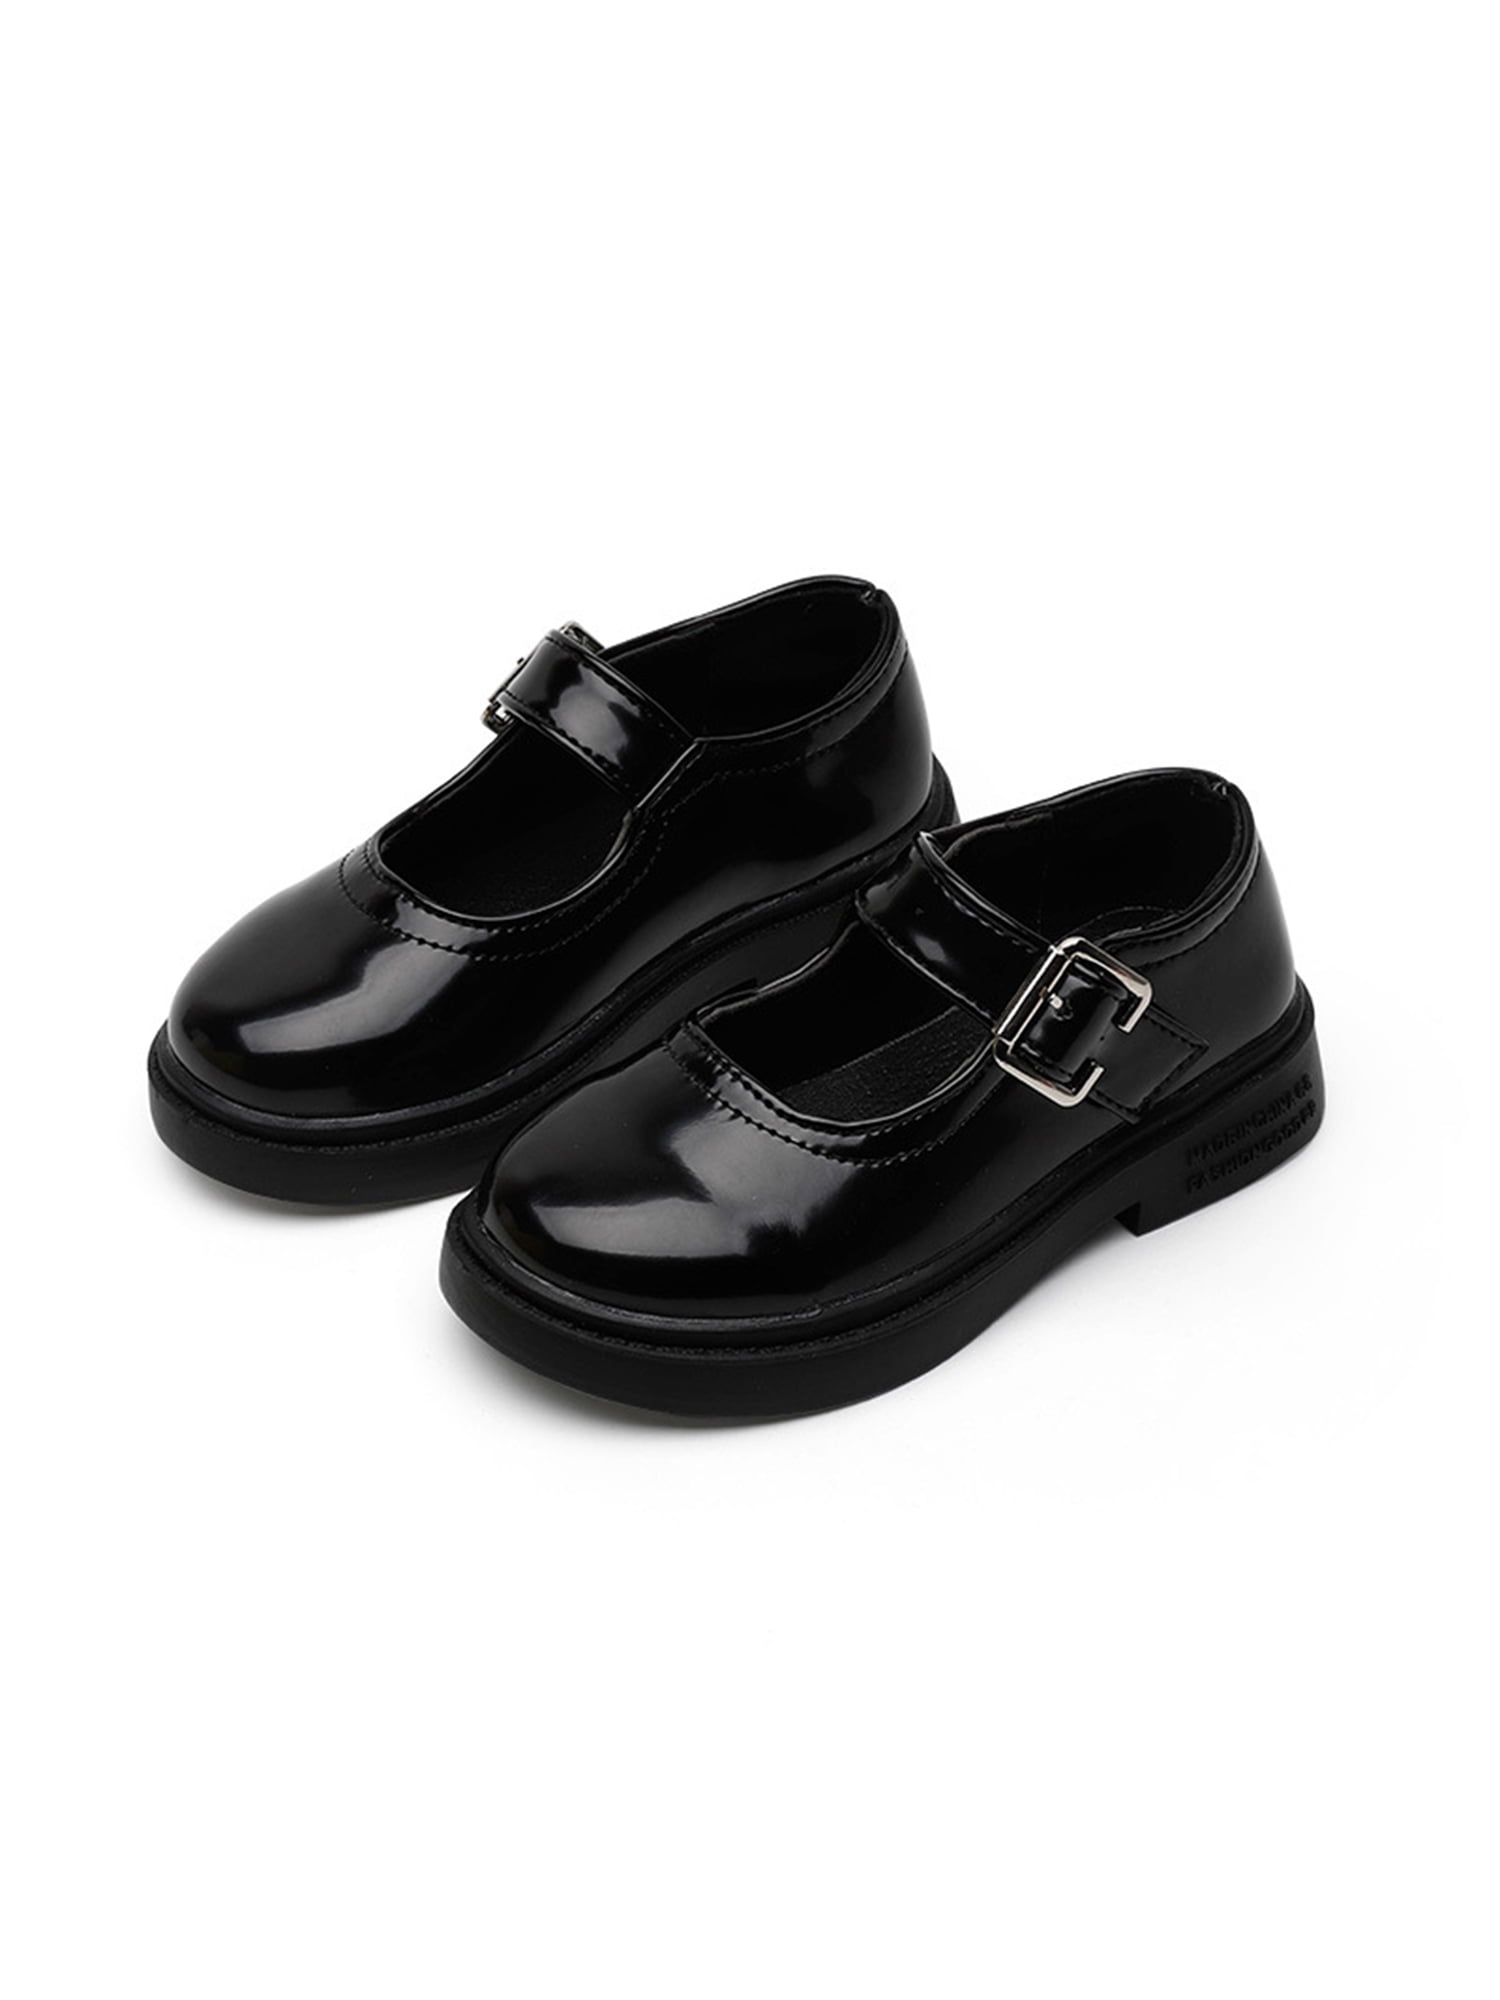 Kids Girls Mary Jane Adjustable Buckle School Uniform Shoes Size Black Pu US 